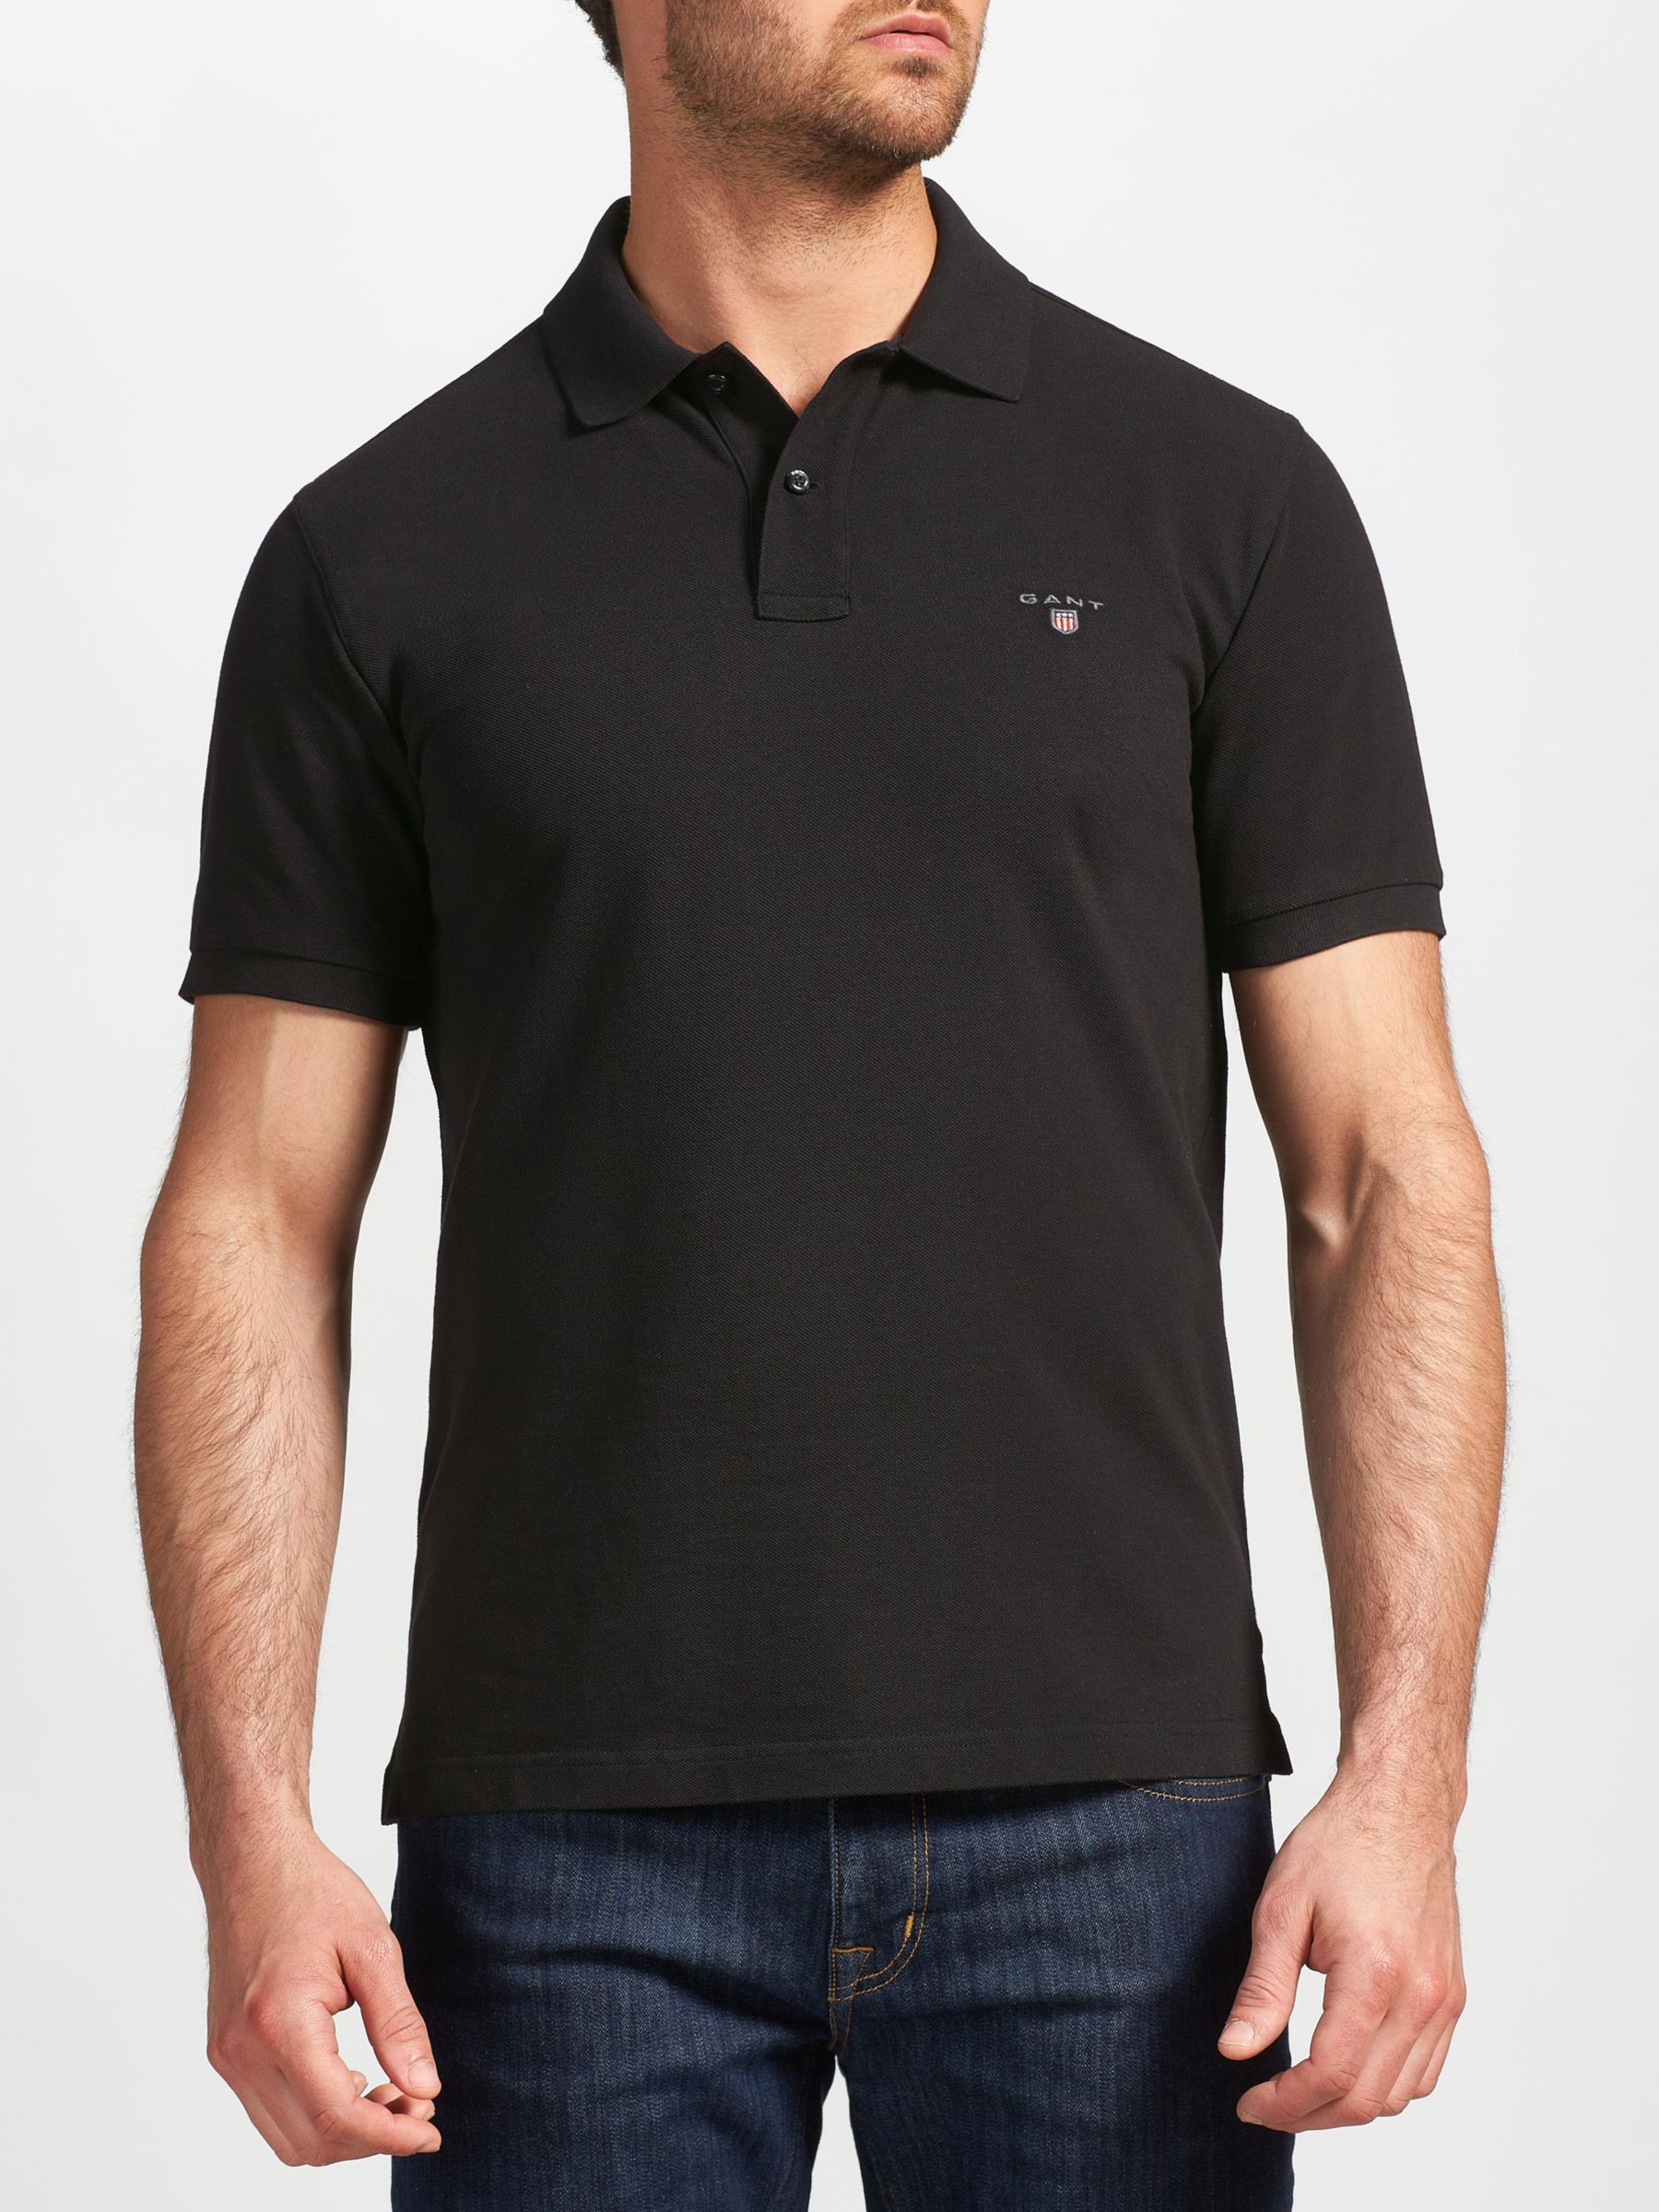 GANT Solid Pique Polo Shirt, Black, M